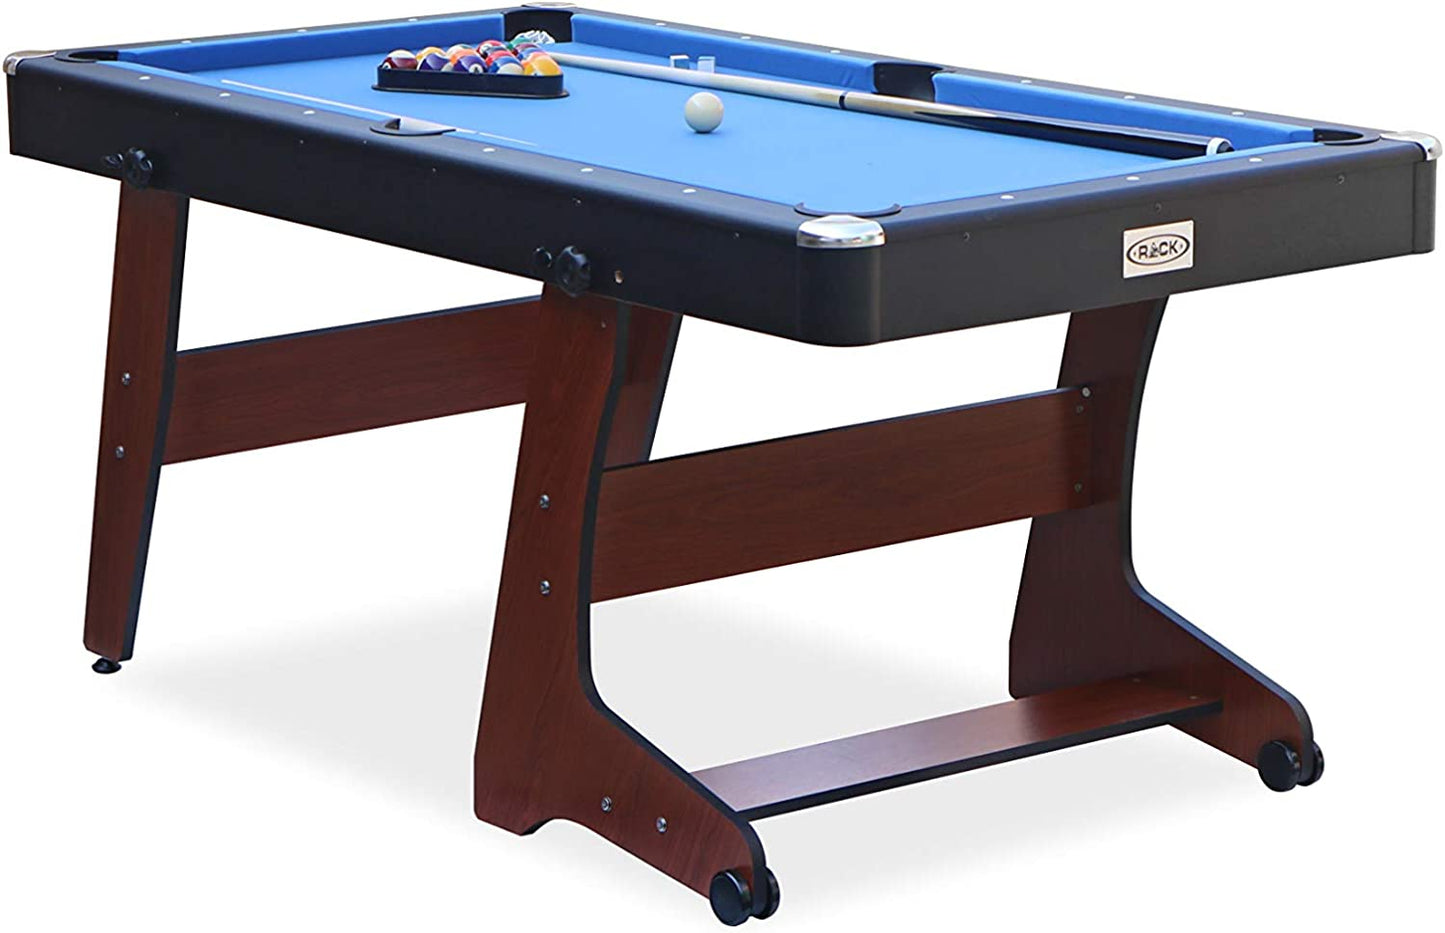 Drogon 5.5-Foot Folding Billiard/Pool Table - Compact and Portable Space-Saving Design